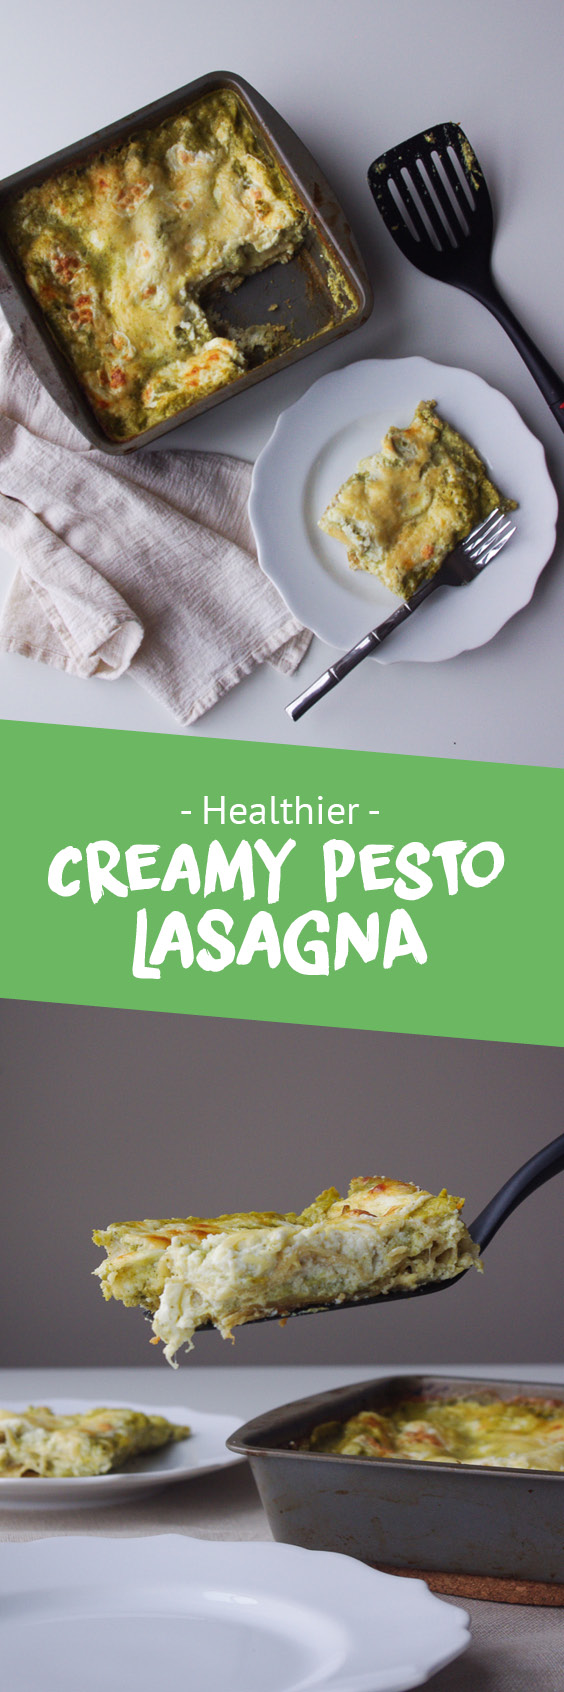 Healthier Creamy Pesto Lasagna - a lighter take on creamy pesto lasagna using cottage cheese and whole wheat noodles | www.thebatterthickens.com